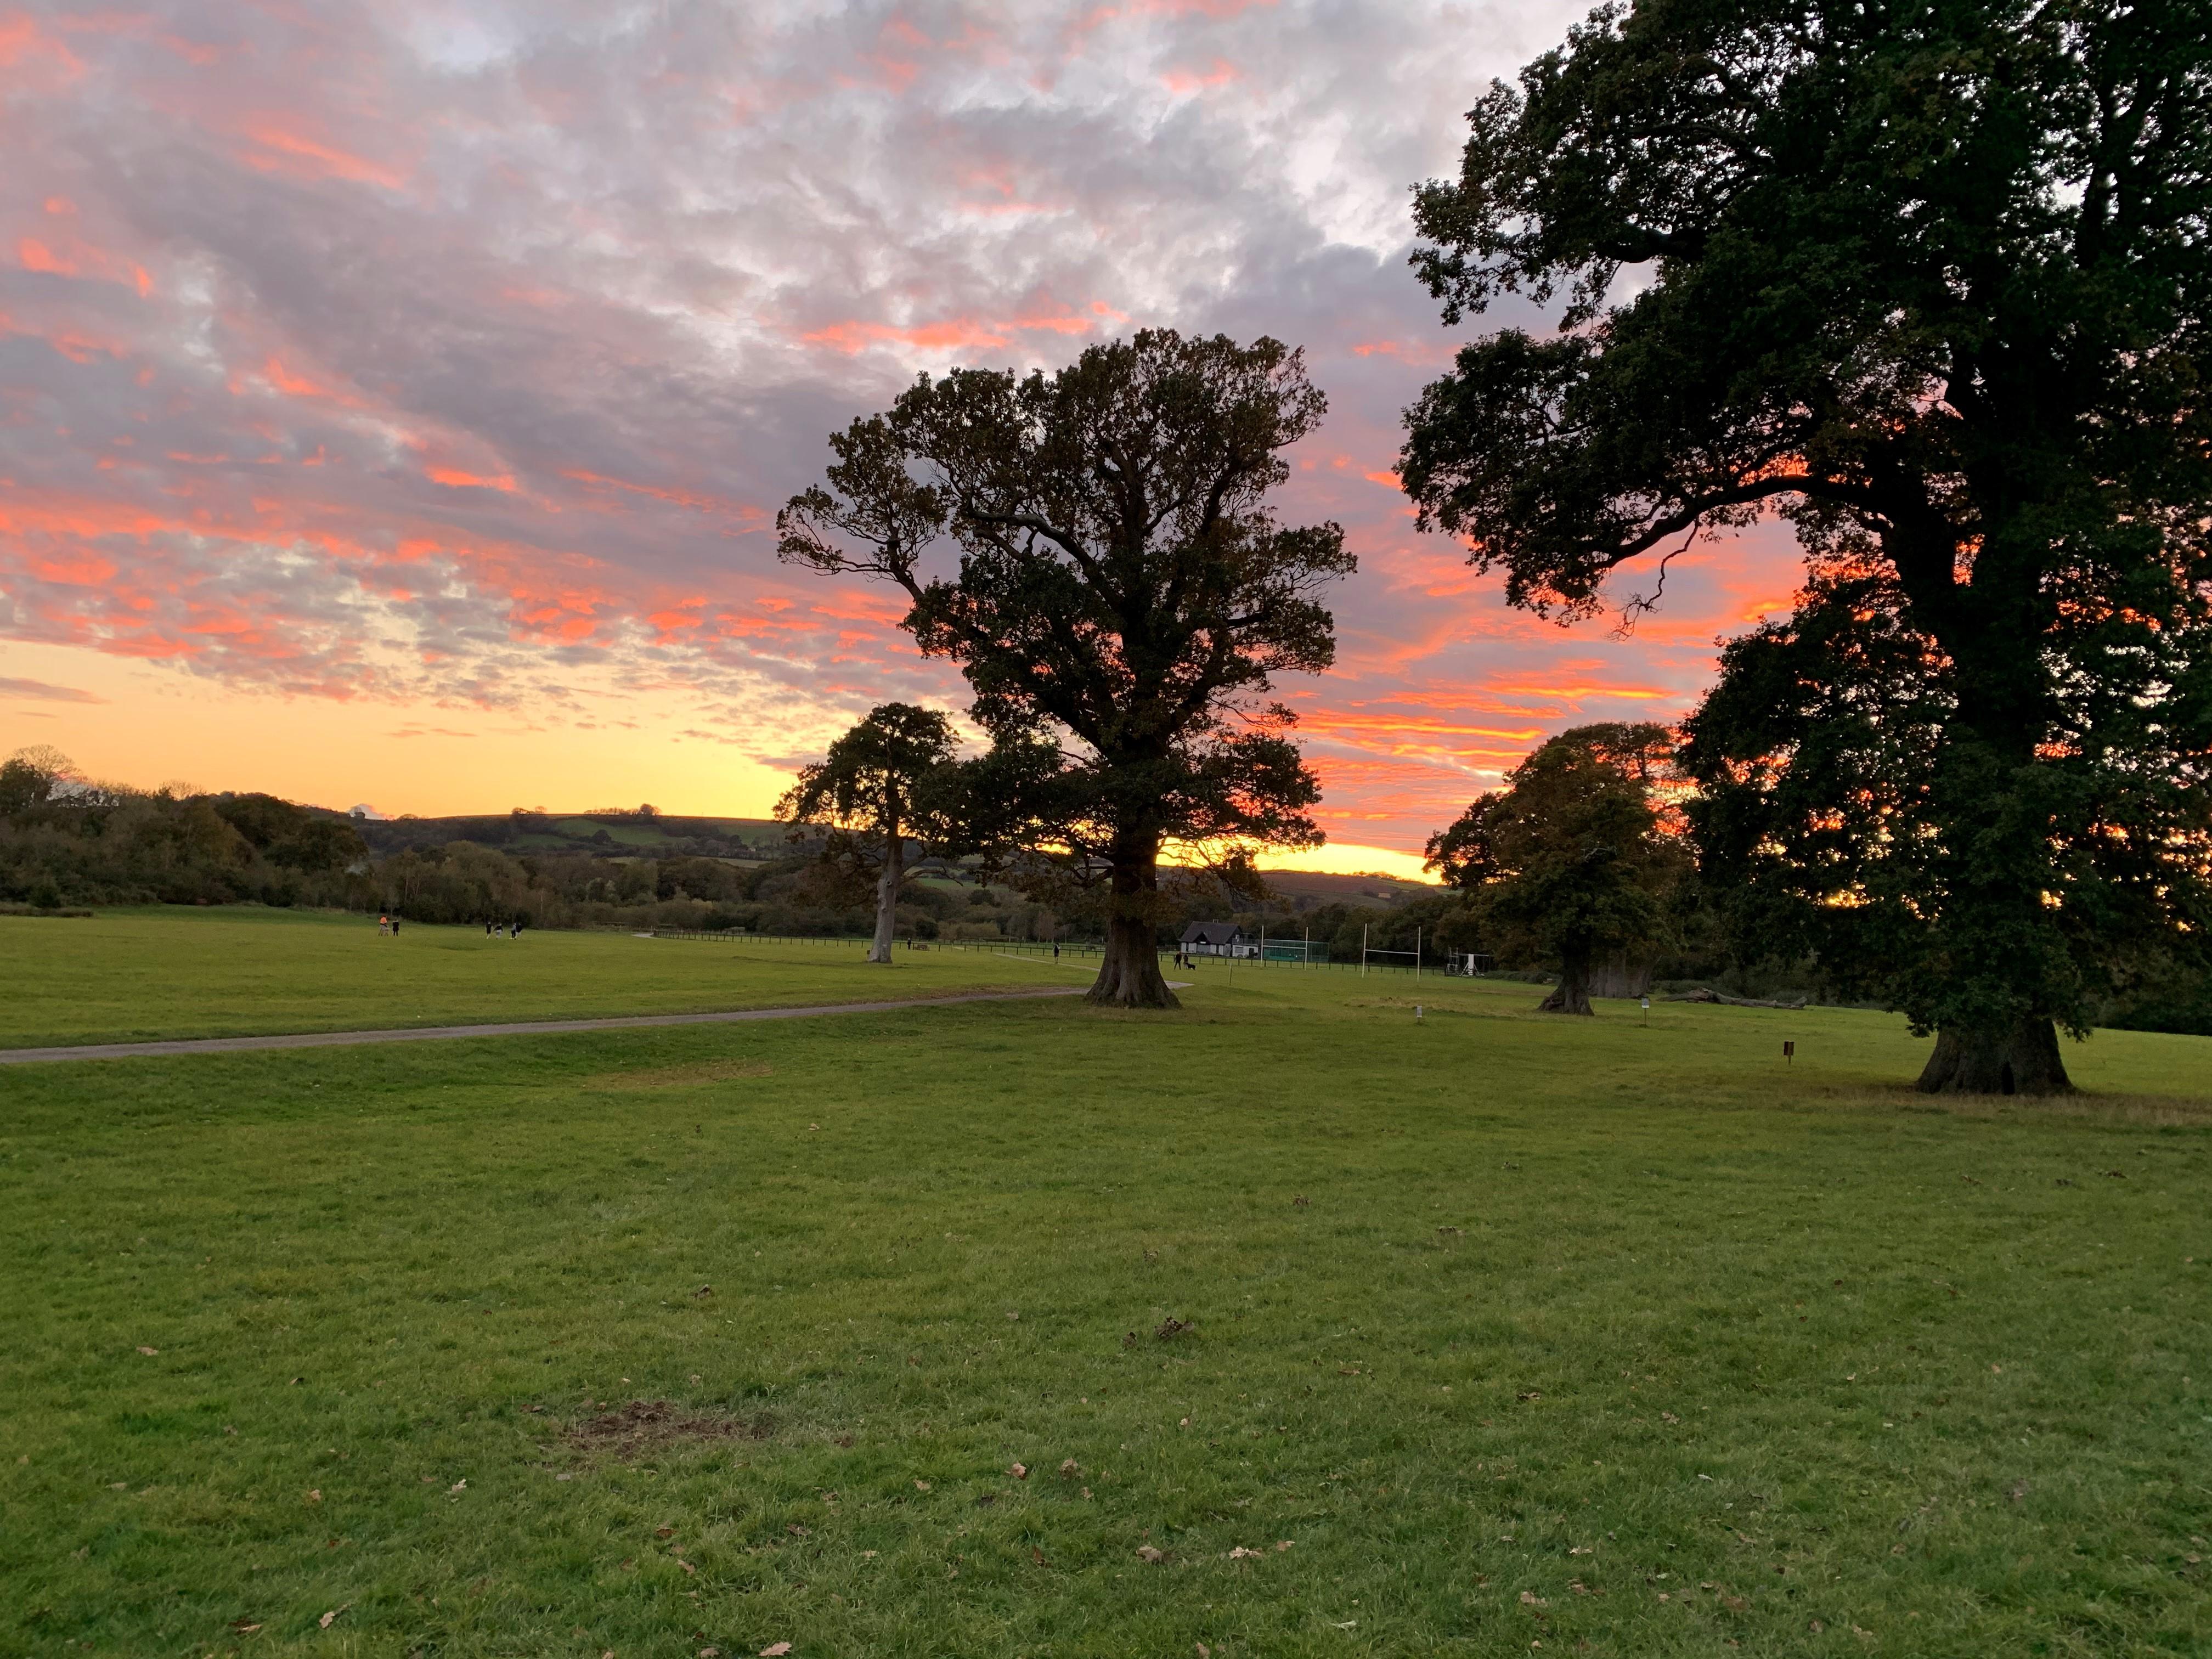 Oak trees at sunset in Filham Park